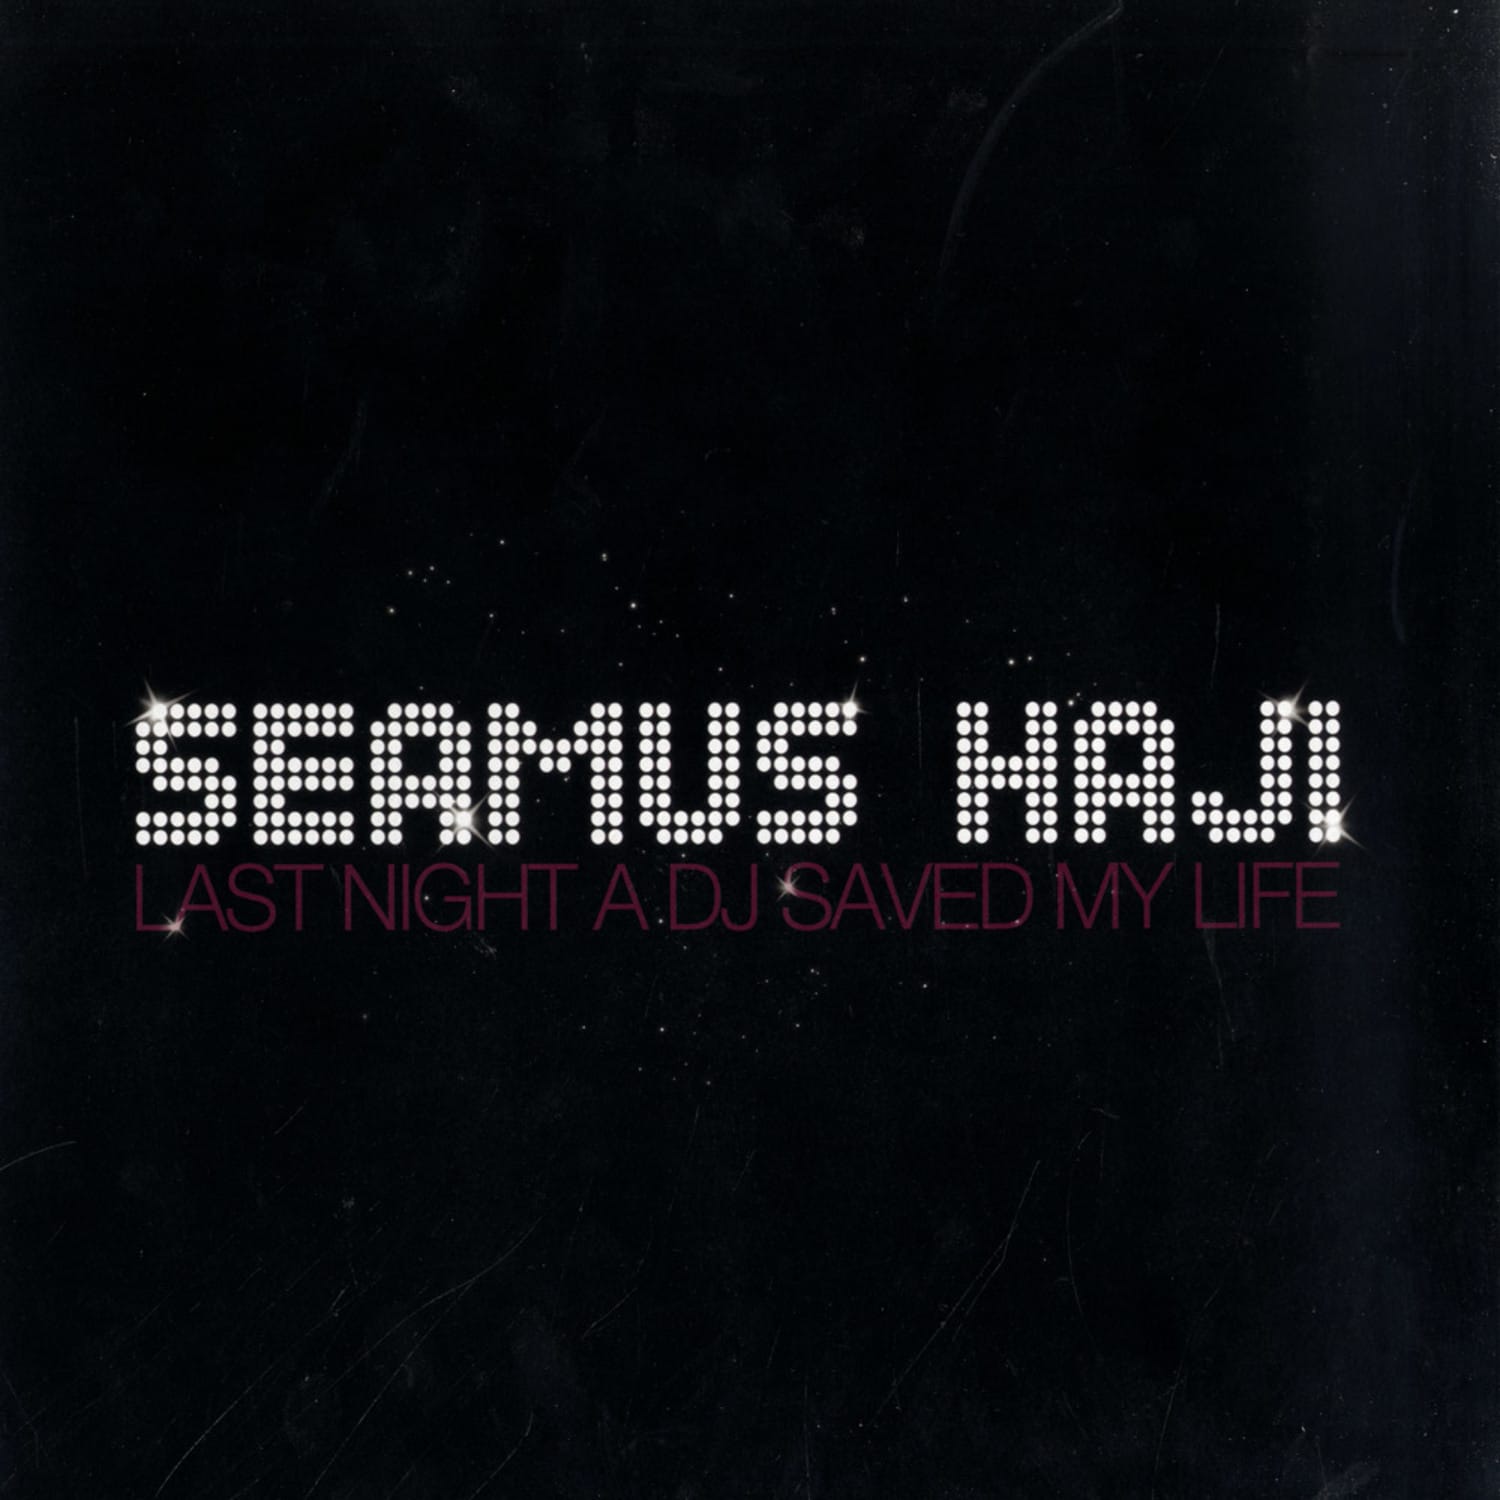 Seamus Haji reat Kayjay - LAST NIGHT A DJ SAVED MY LIFE